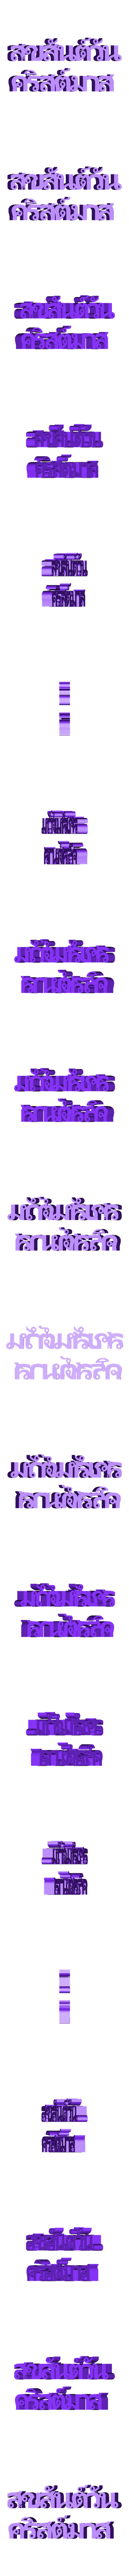 Thai.stl Download free STL file Christmas Lettering Blocks • 3D printable model, tone001